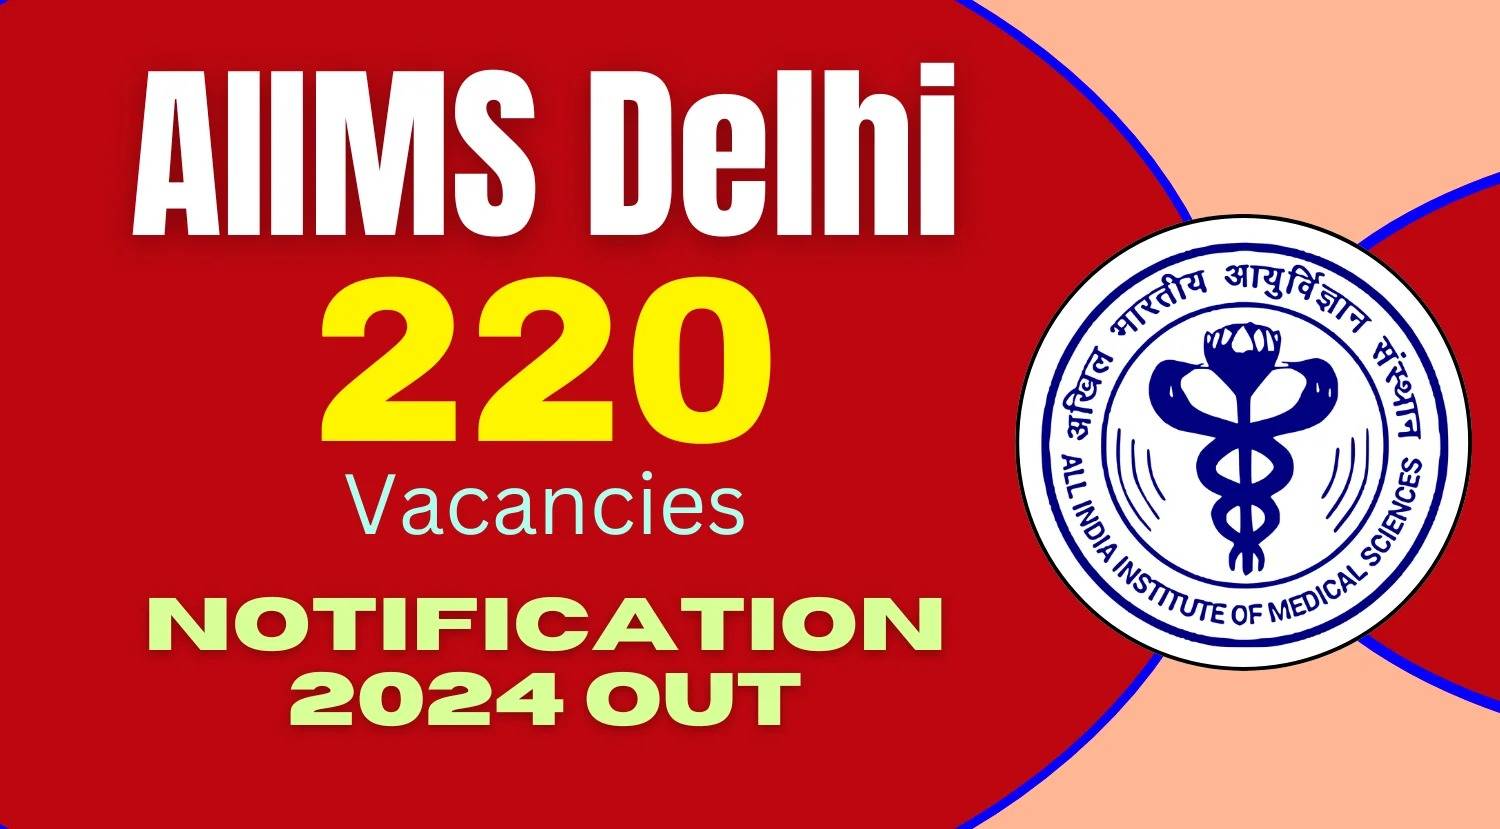 AIIMS Delhi Announces Recruitment for 220 Junior Resident Positions, Apply Now